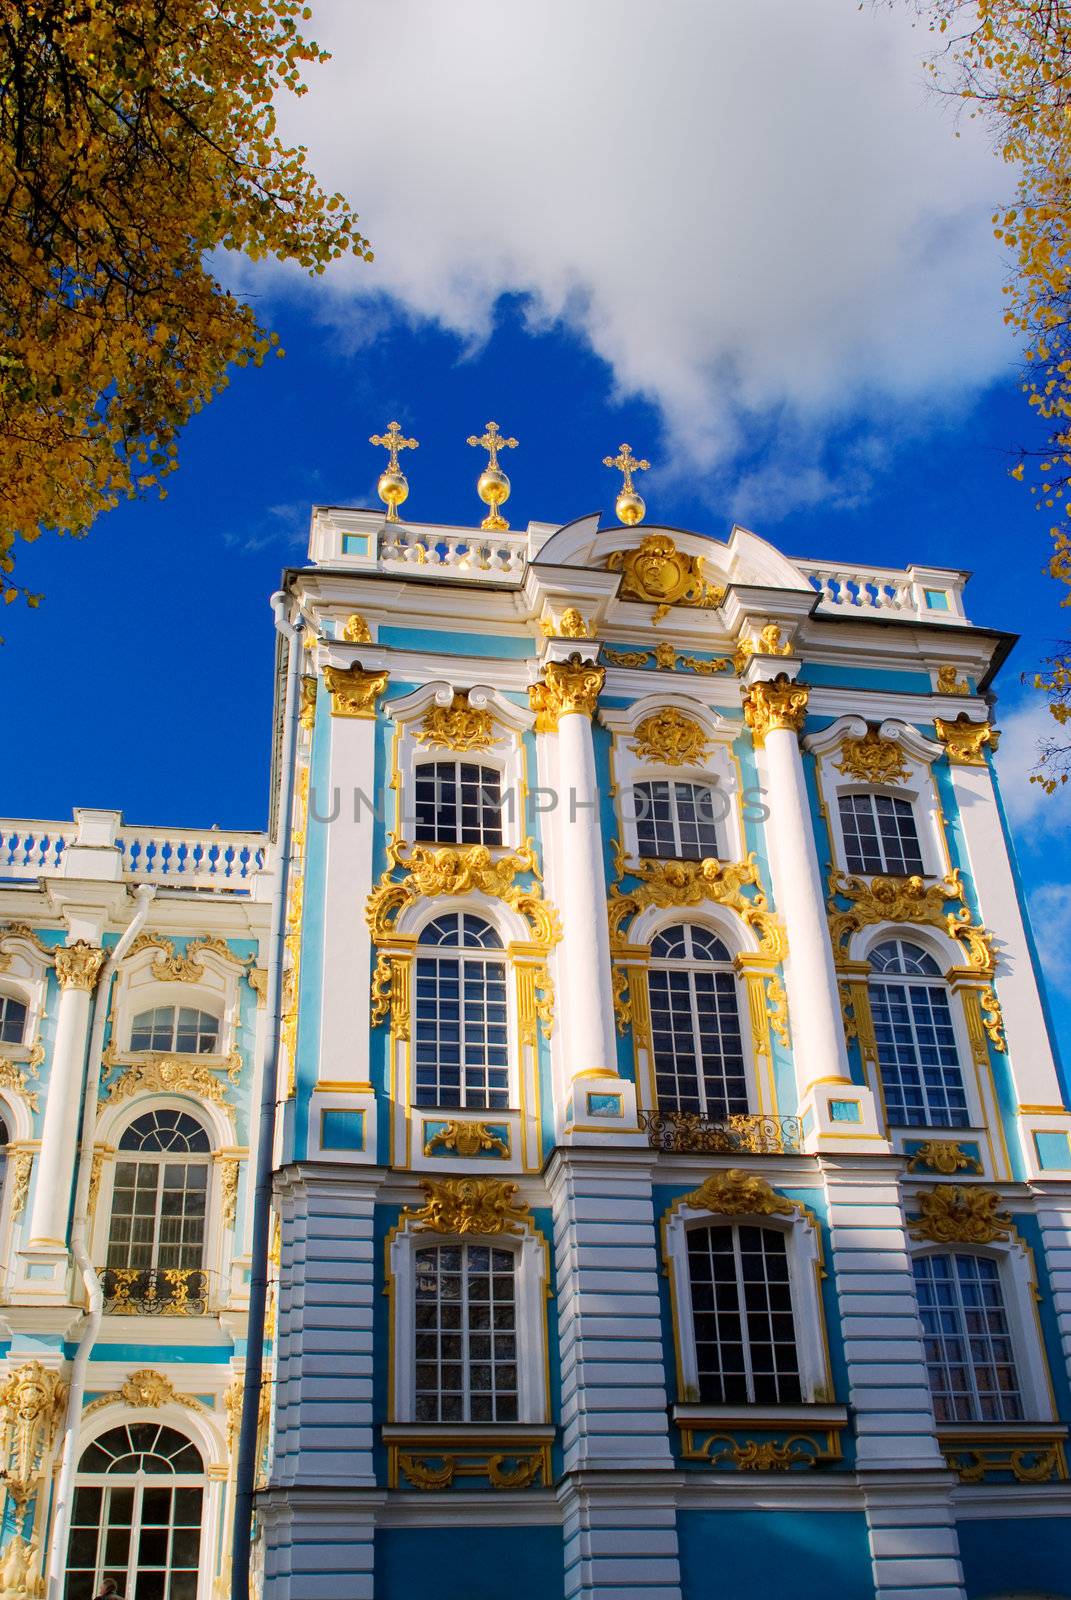 Pushkin's palace in Tsarskoe selo in autumn